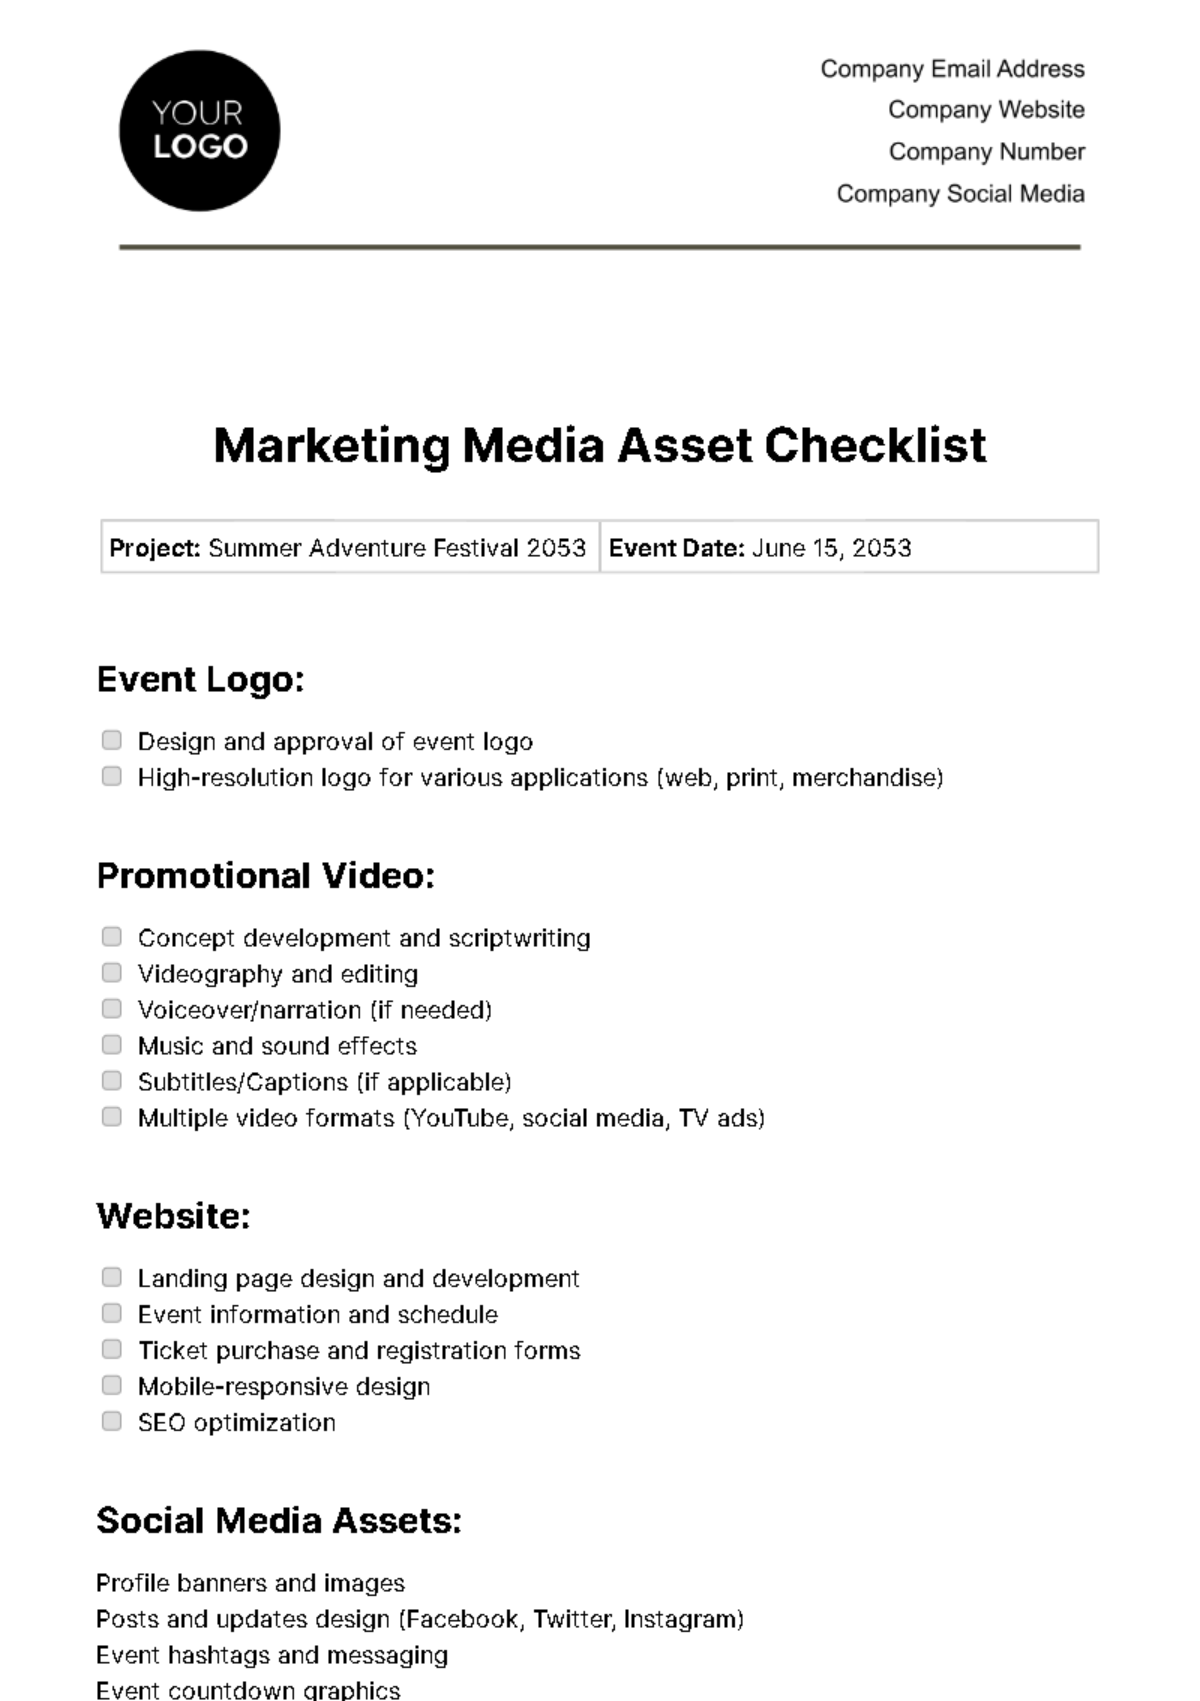 Free Marketing Media Asset Checklist Template